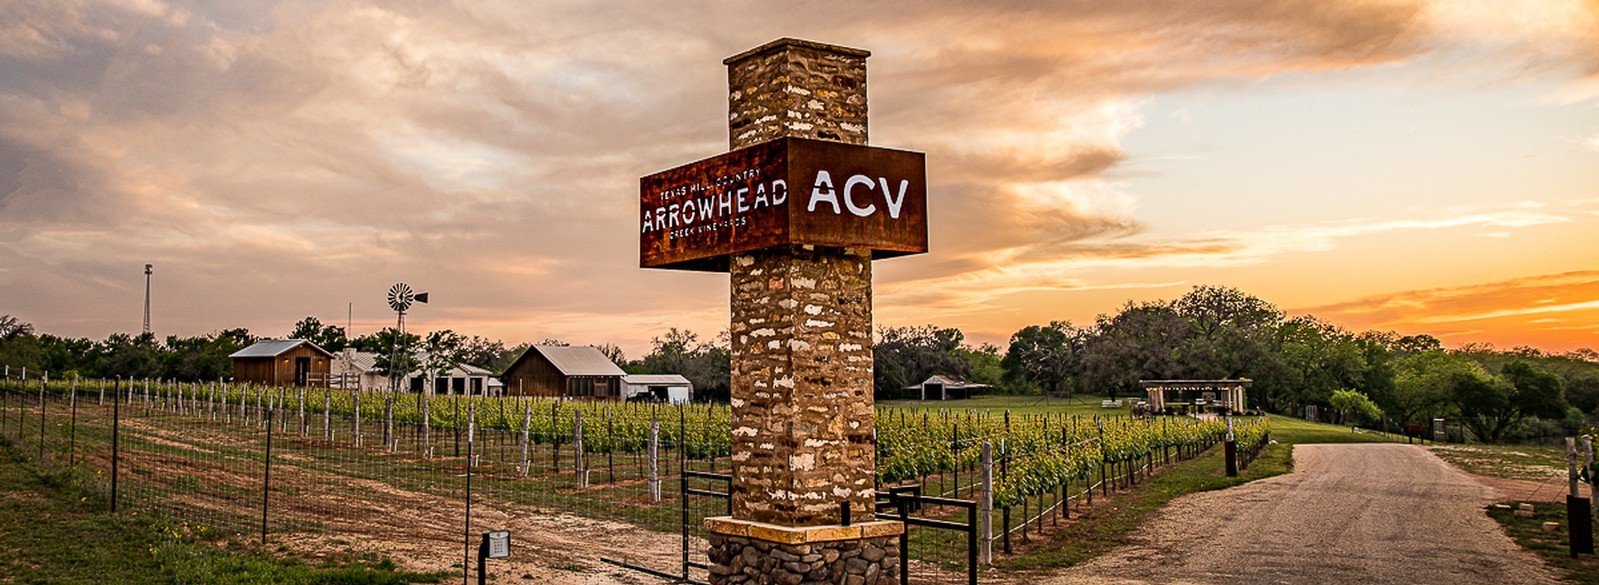 Arrowhead Creek Vineyard Entrance